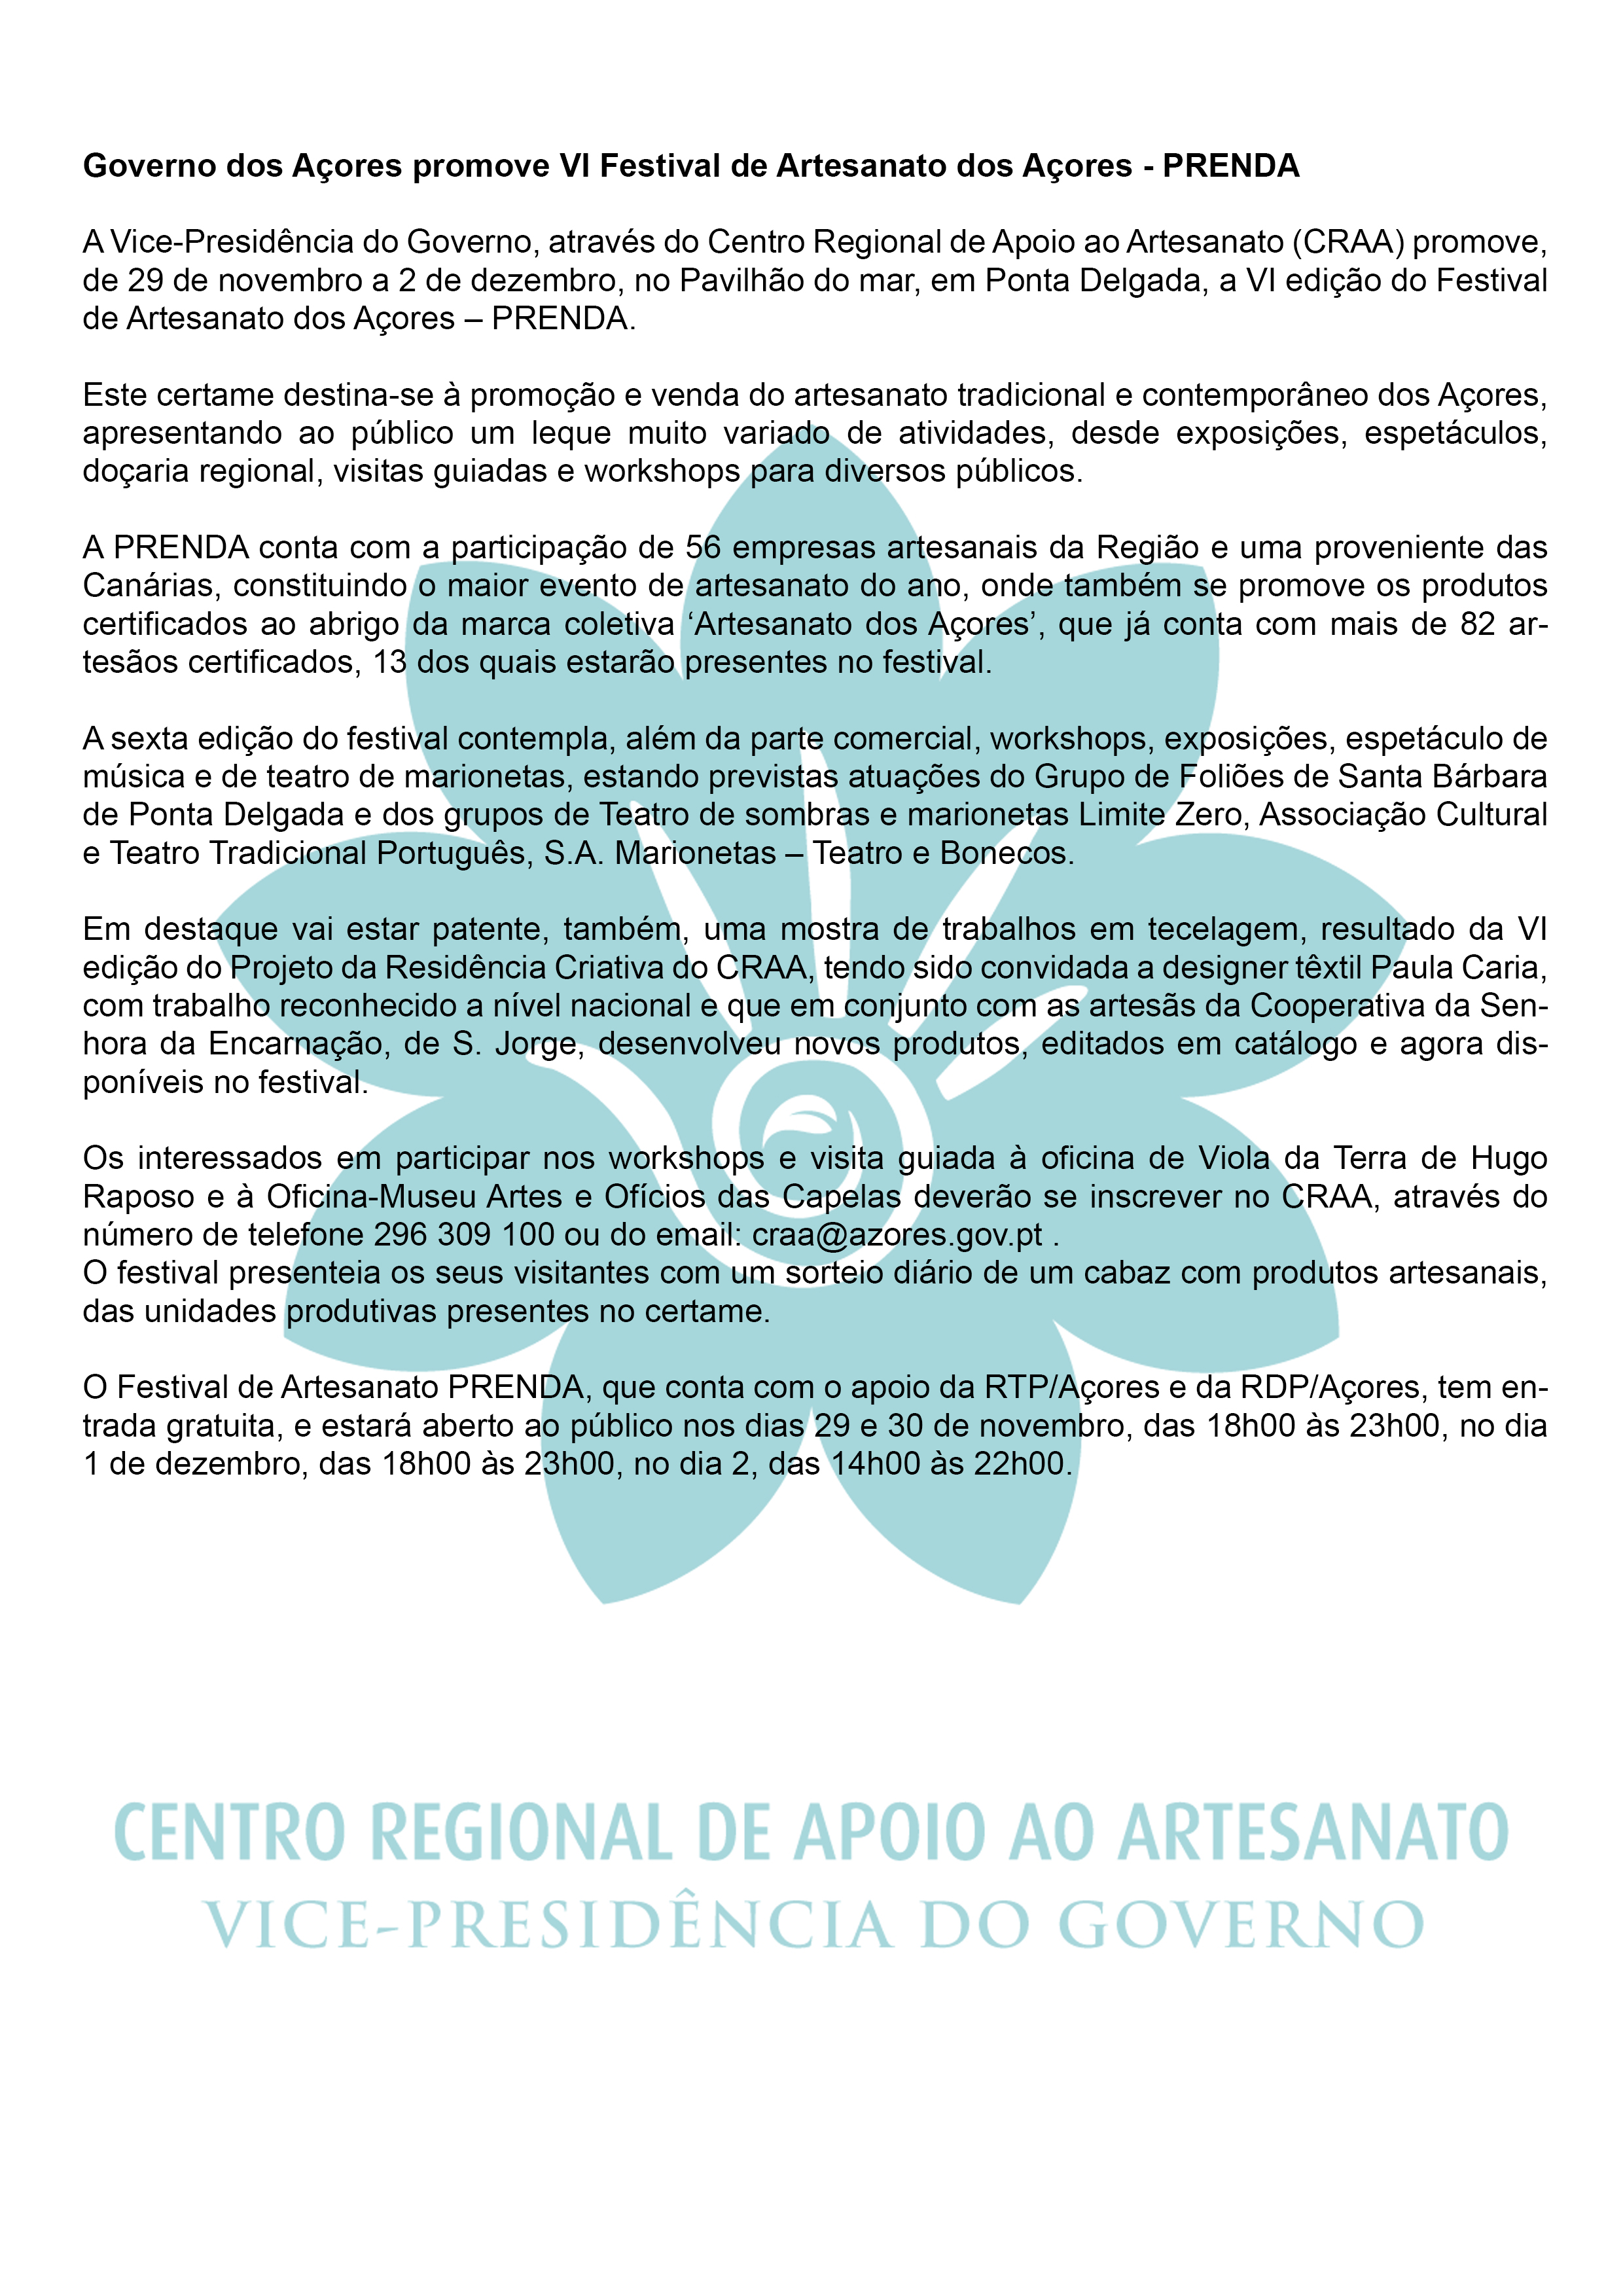 Governo dos Acores promove VI Festival de Artesanato dos Acores - PRENDA PT